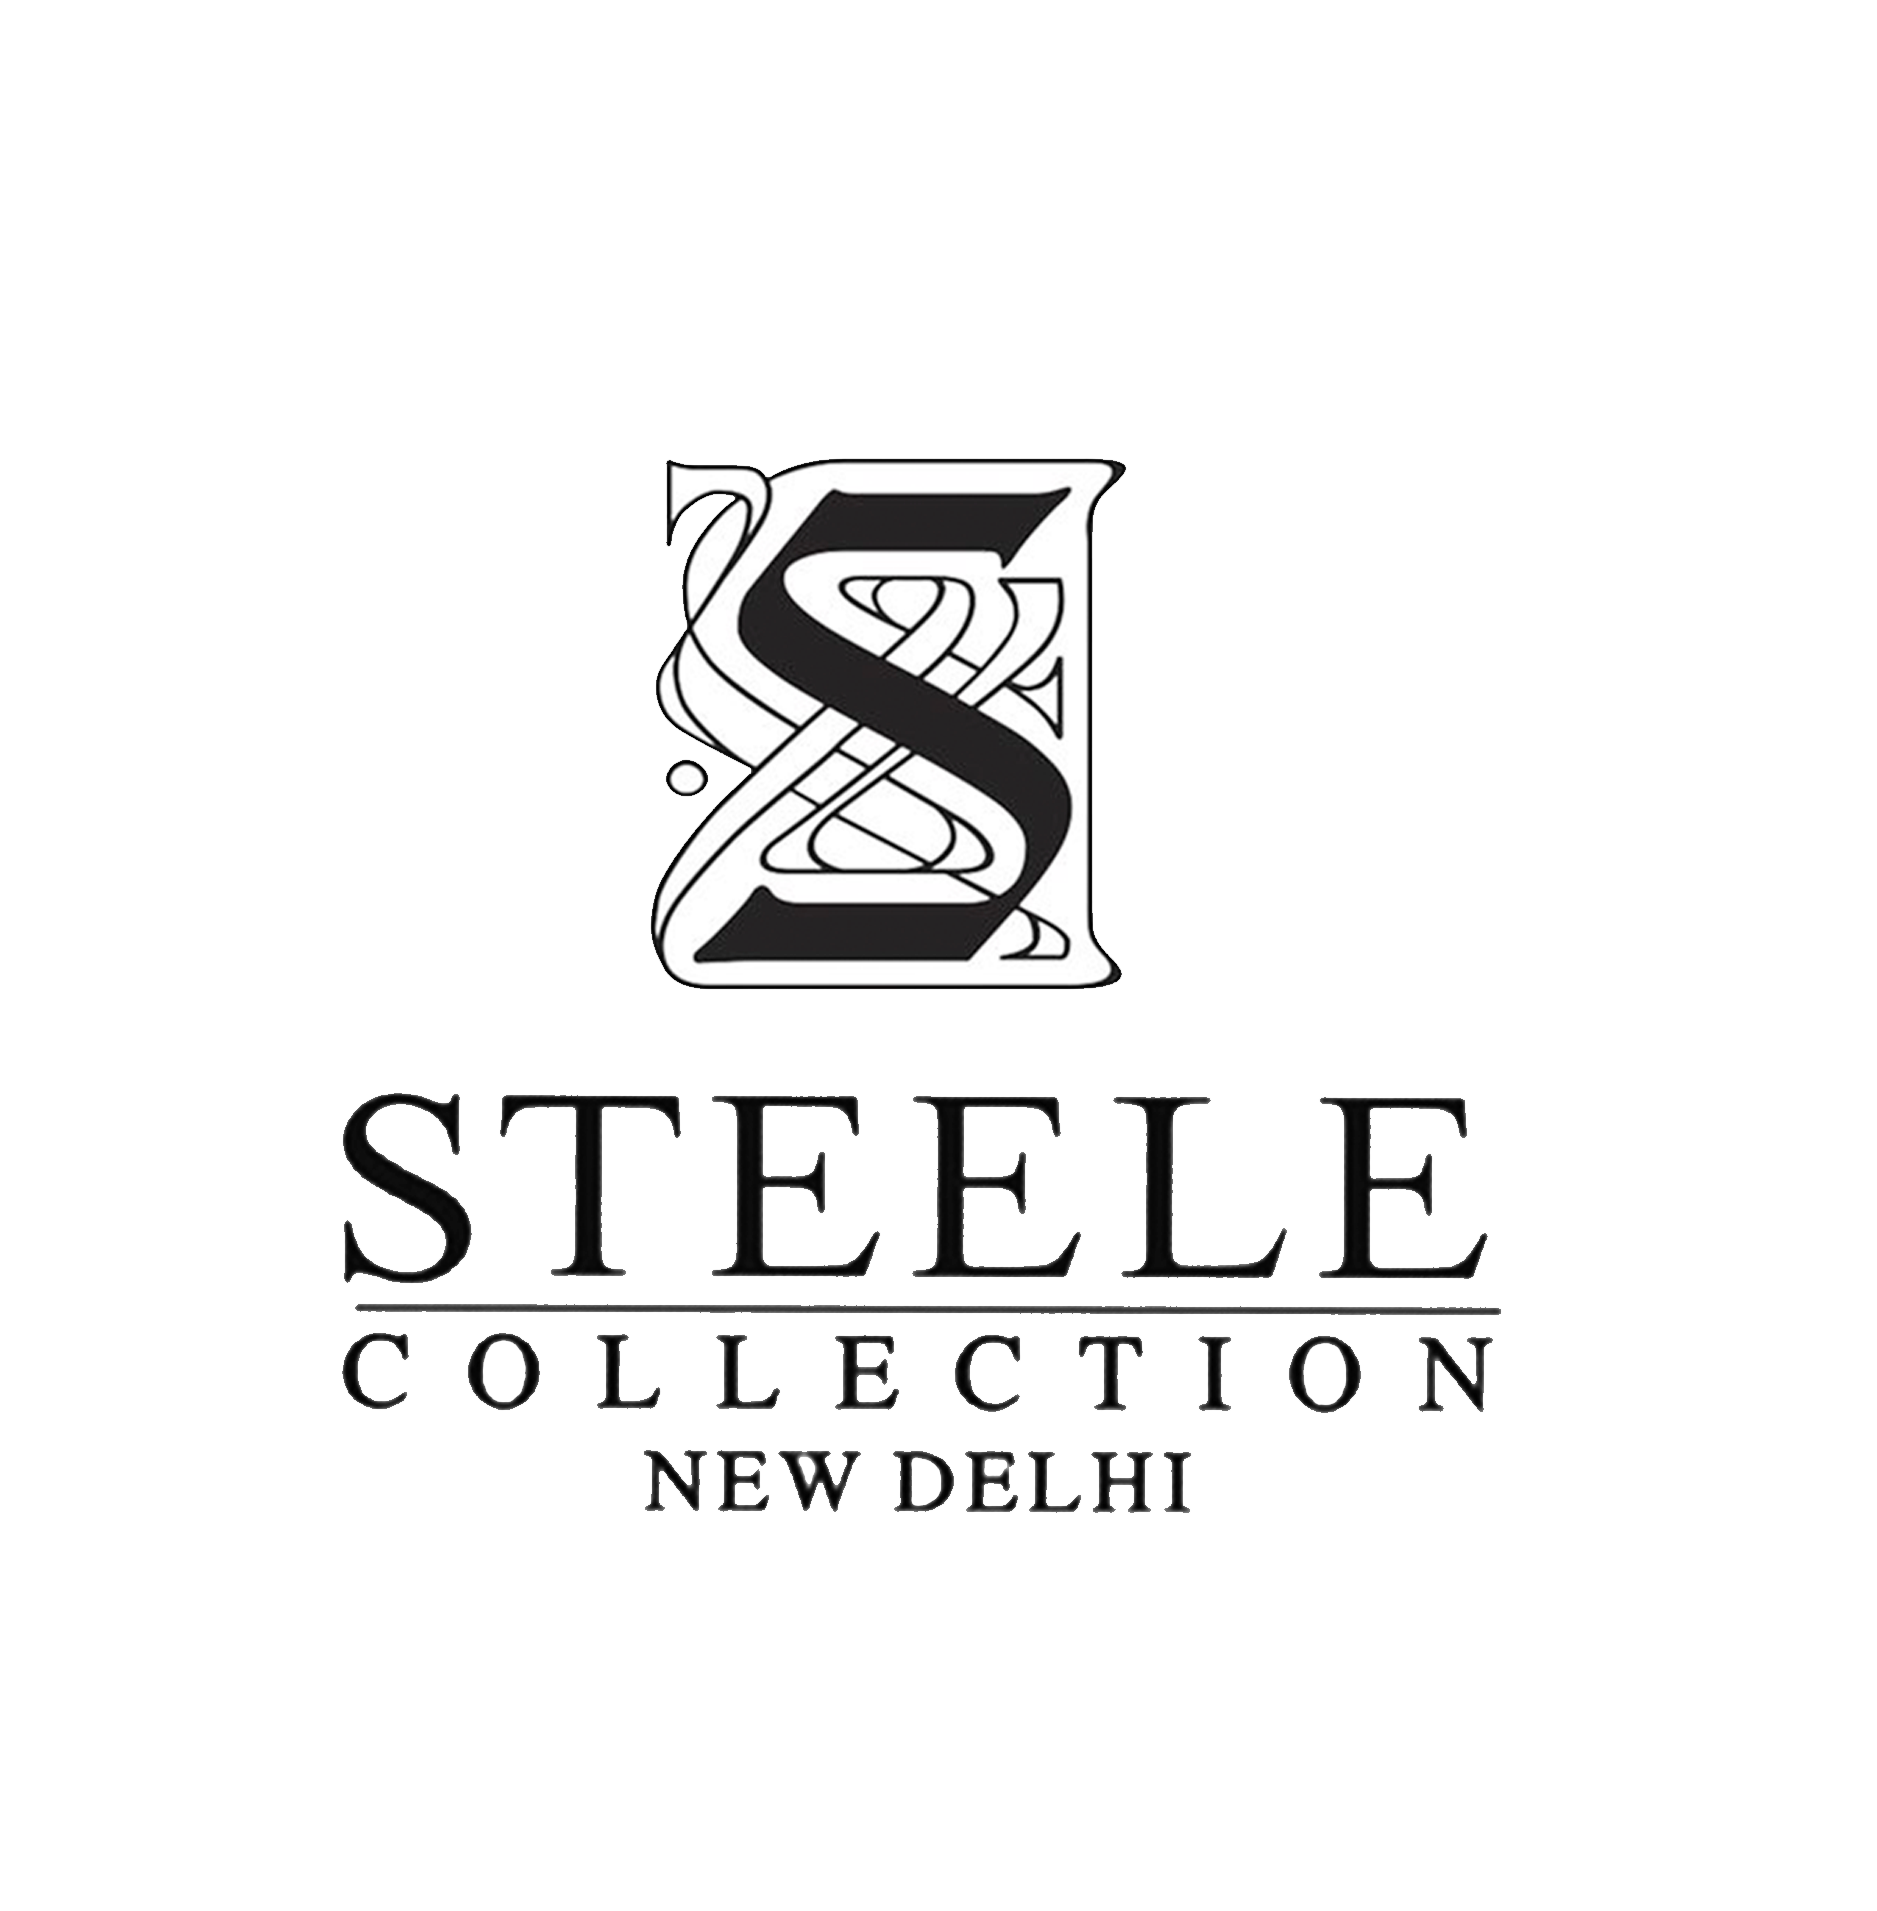 Steele logo